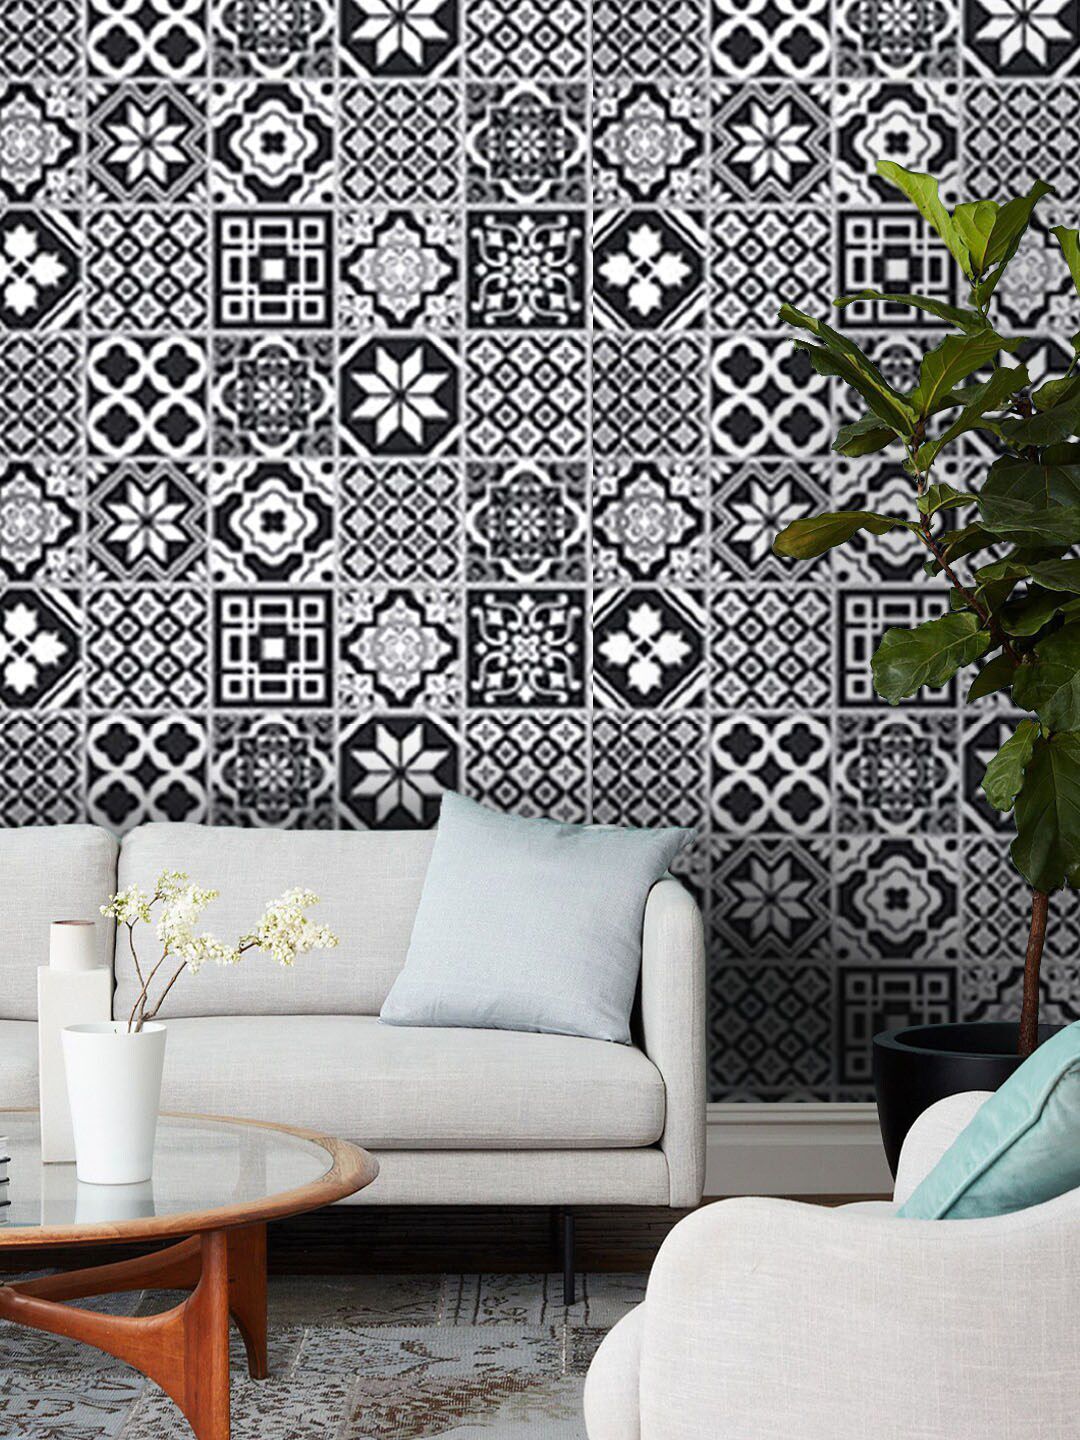 Jaamso Royals Black & White Mosaic Tile Self-Adhesive Waterproof Wallpaper Price in India